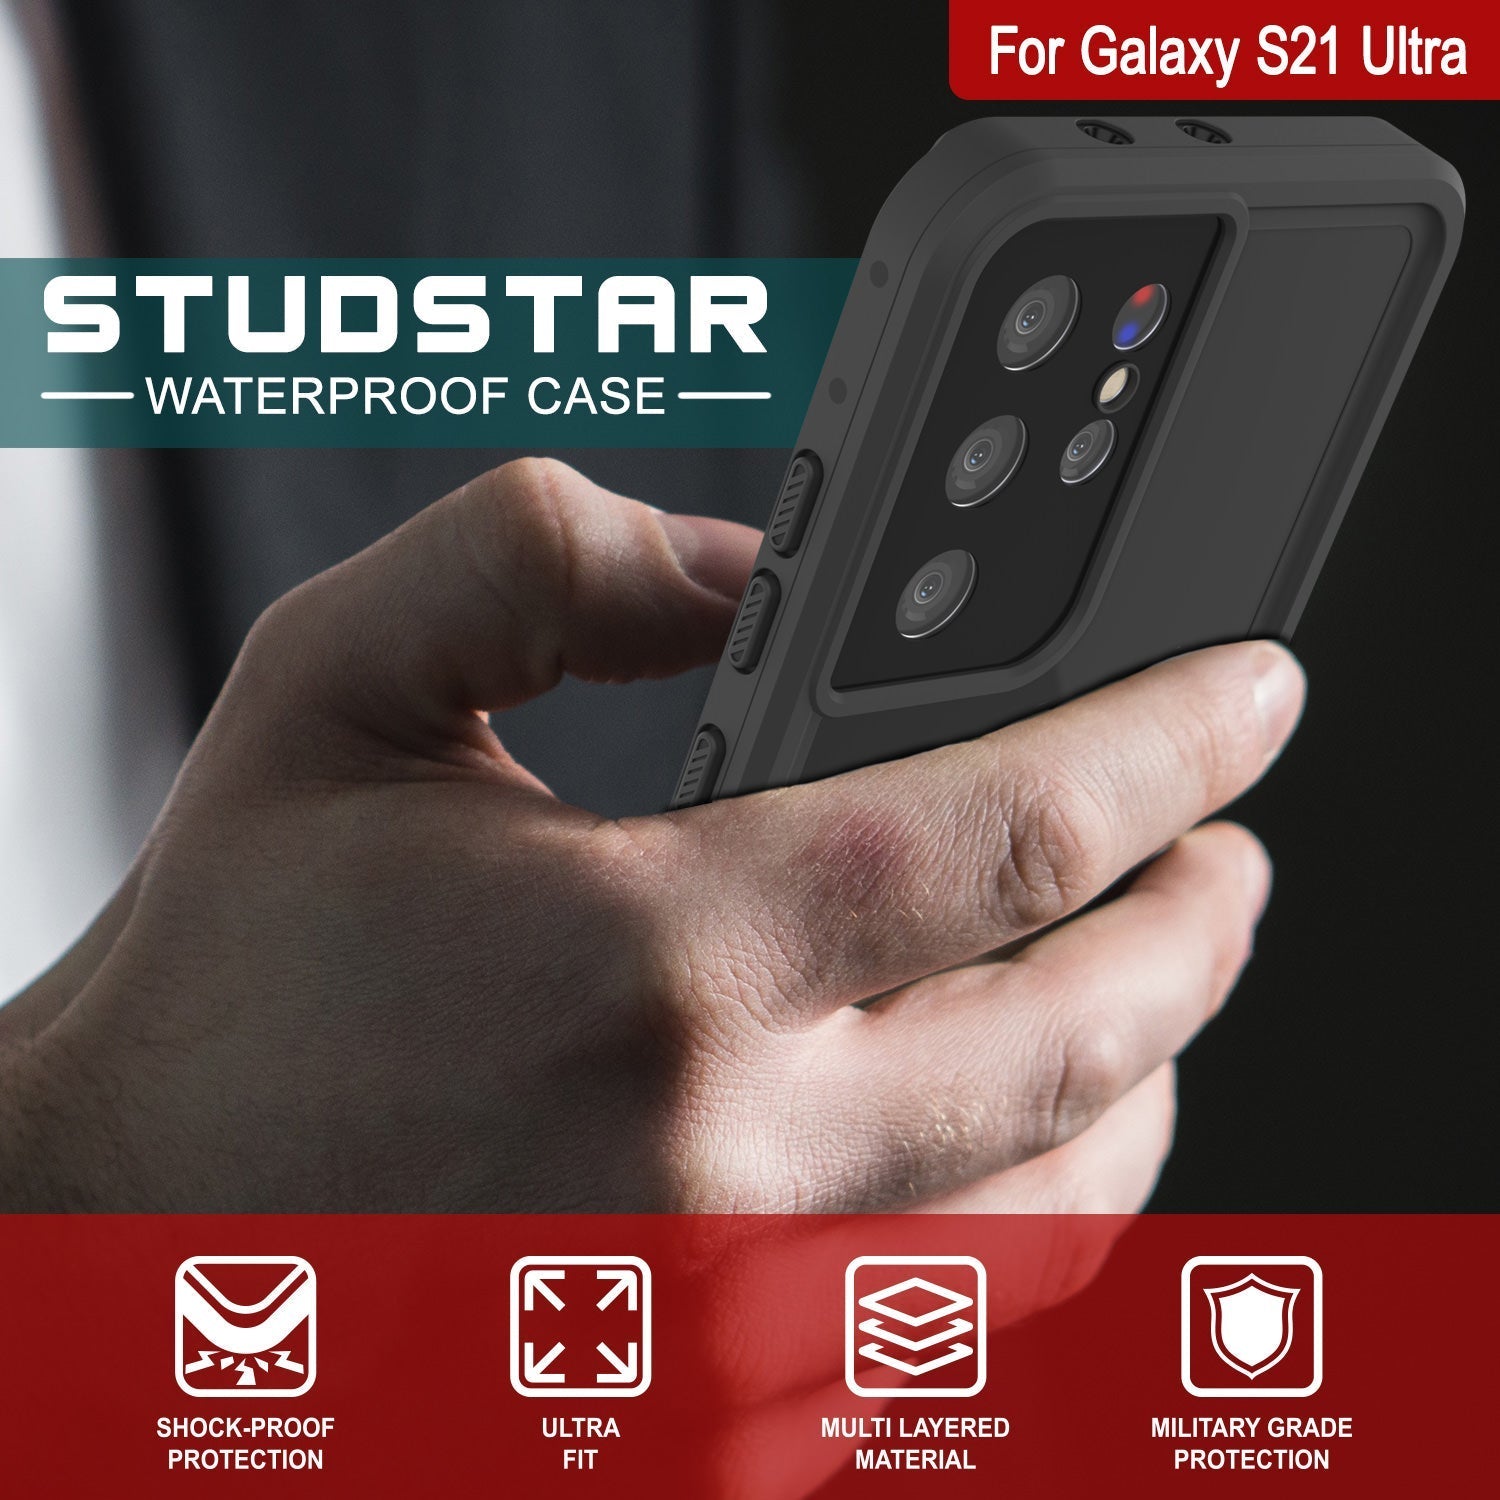 Galaxy S22 Ultra Waterproof Case PunkCase StudStar Black Thin 6.6ft Underwater IP68 Shock/Snow Proof